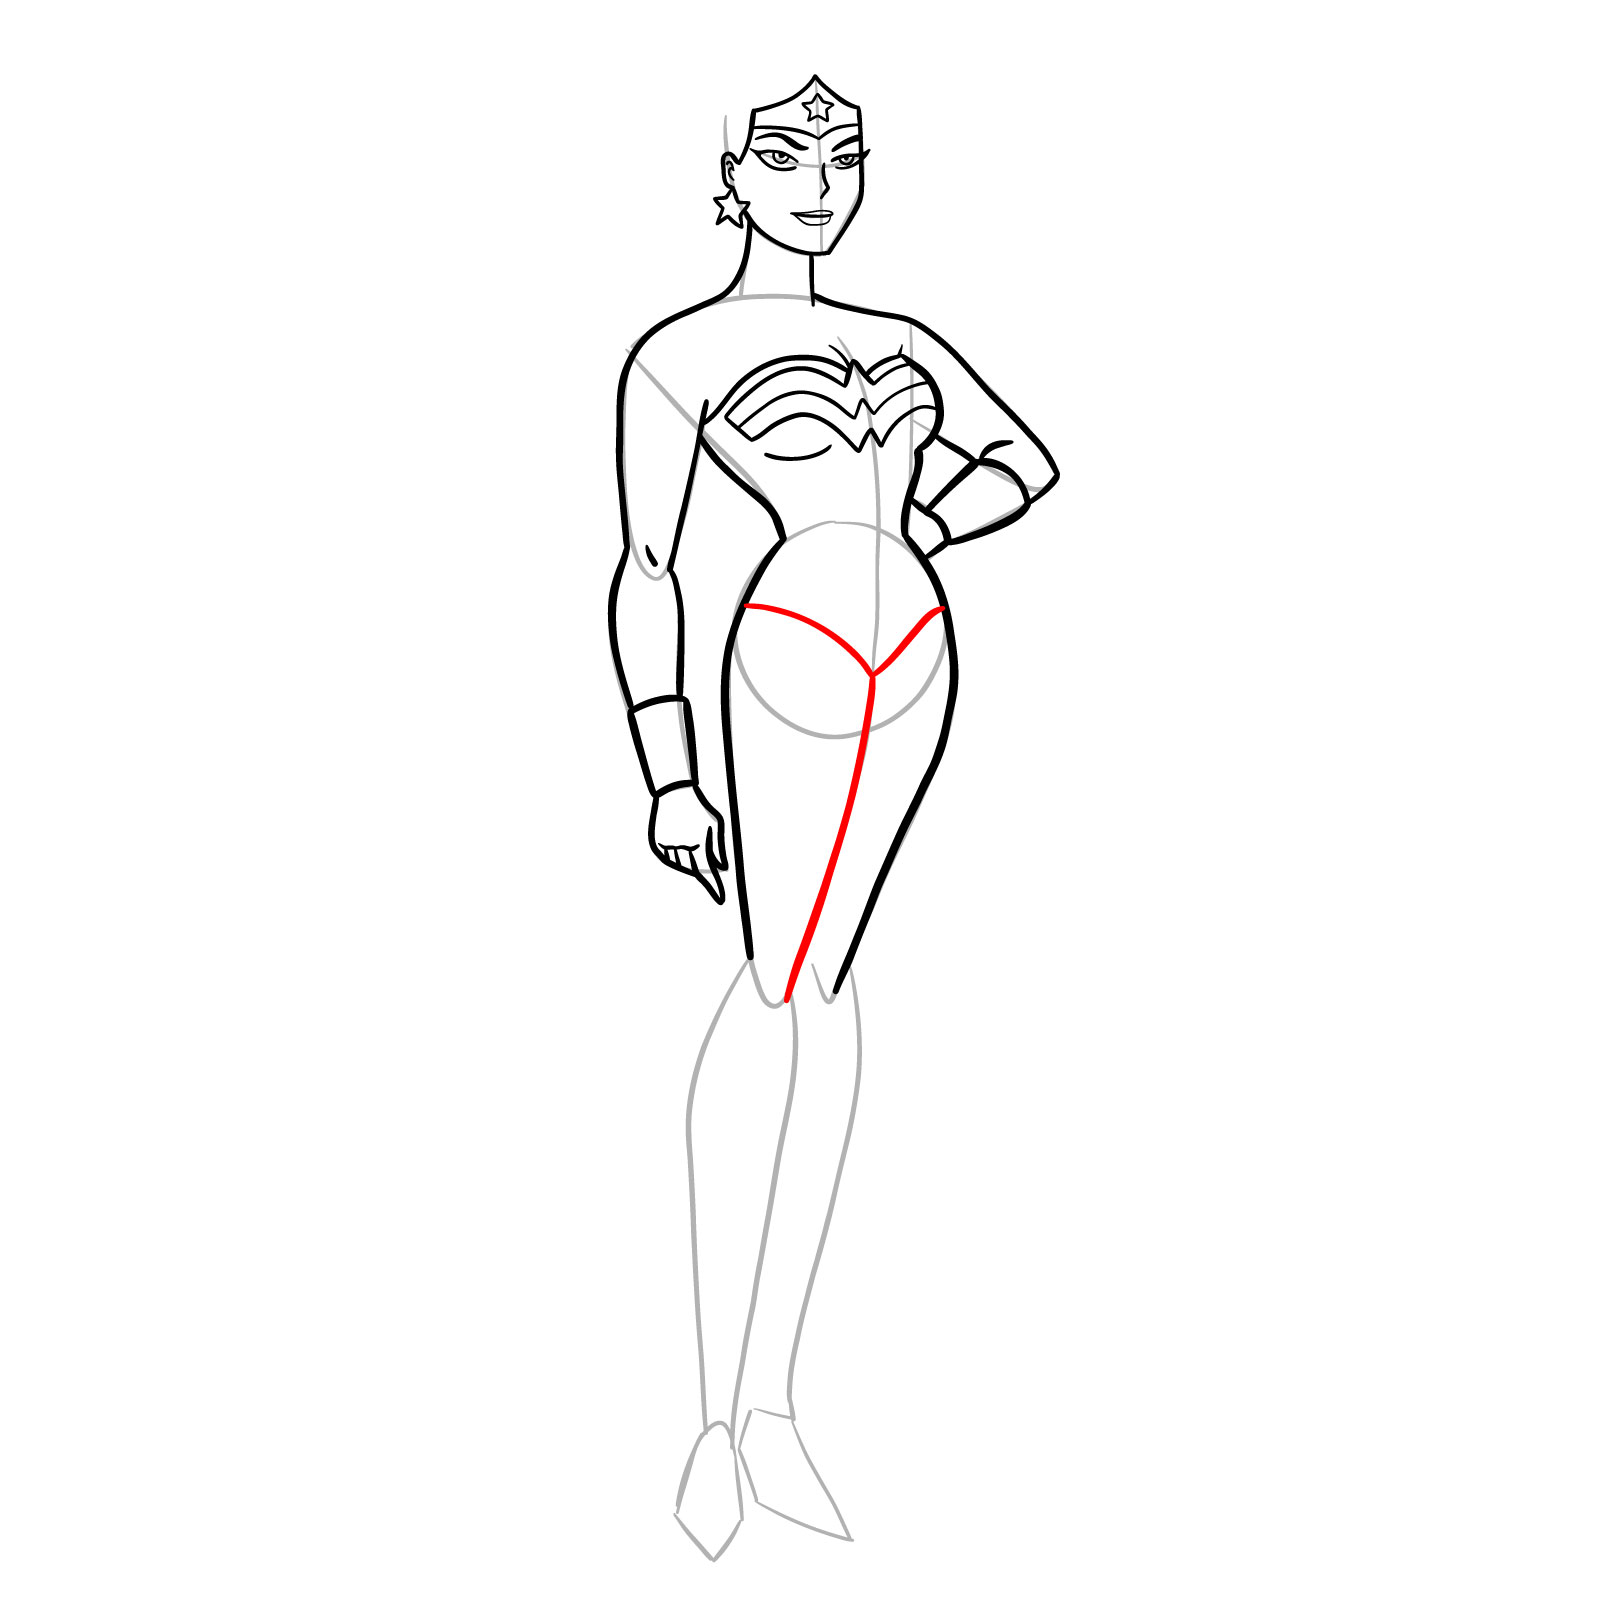 How to draw Wonder Woman cartoon style - step 22